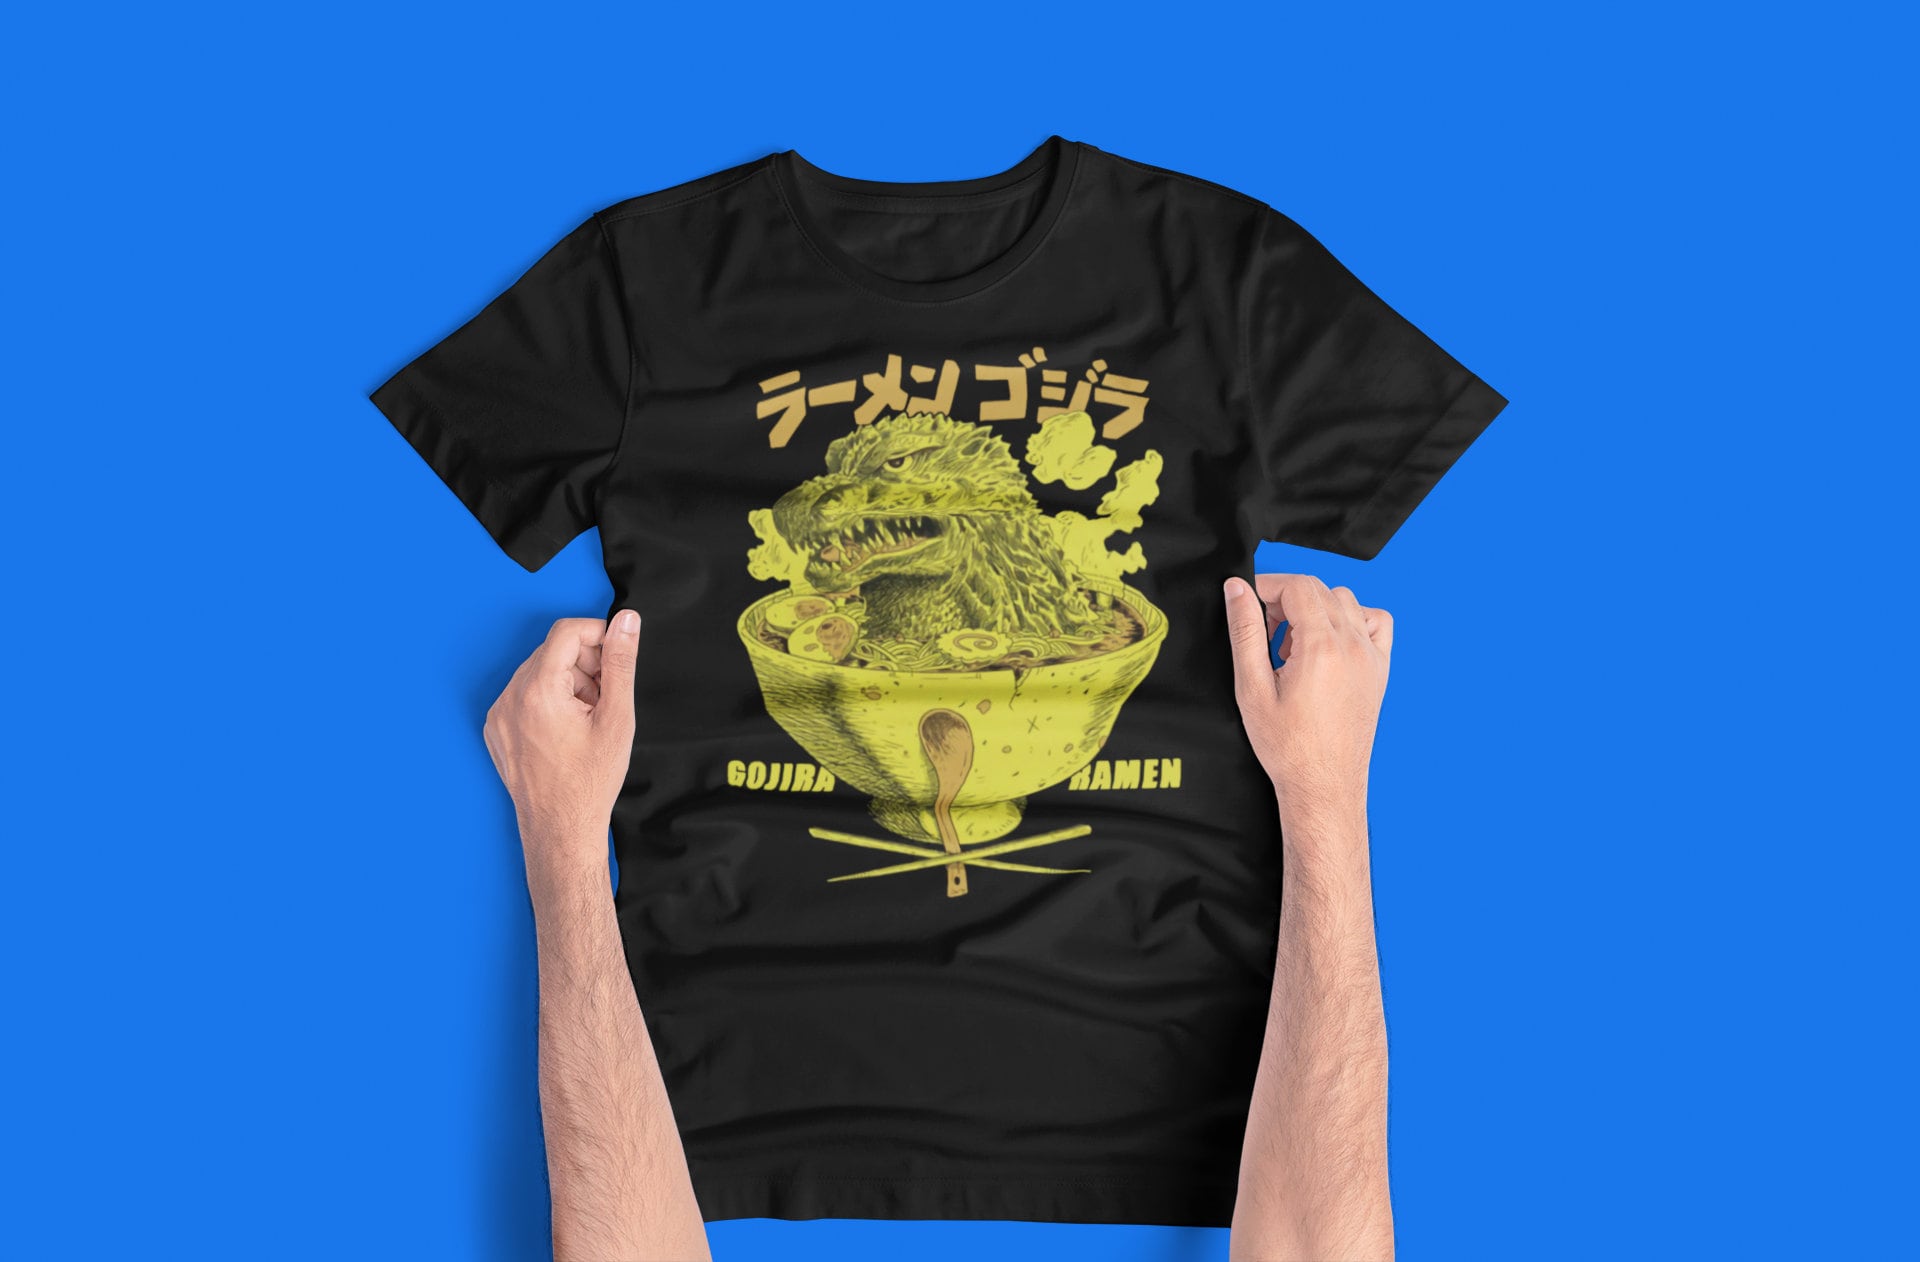 Godzilla Shirt Gojira Ramen Poster Vtg Black Tee Clothing Tshirt Size S - 3xl Usa